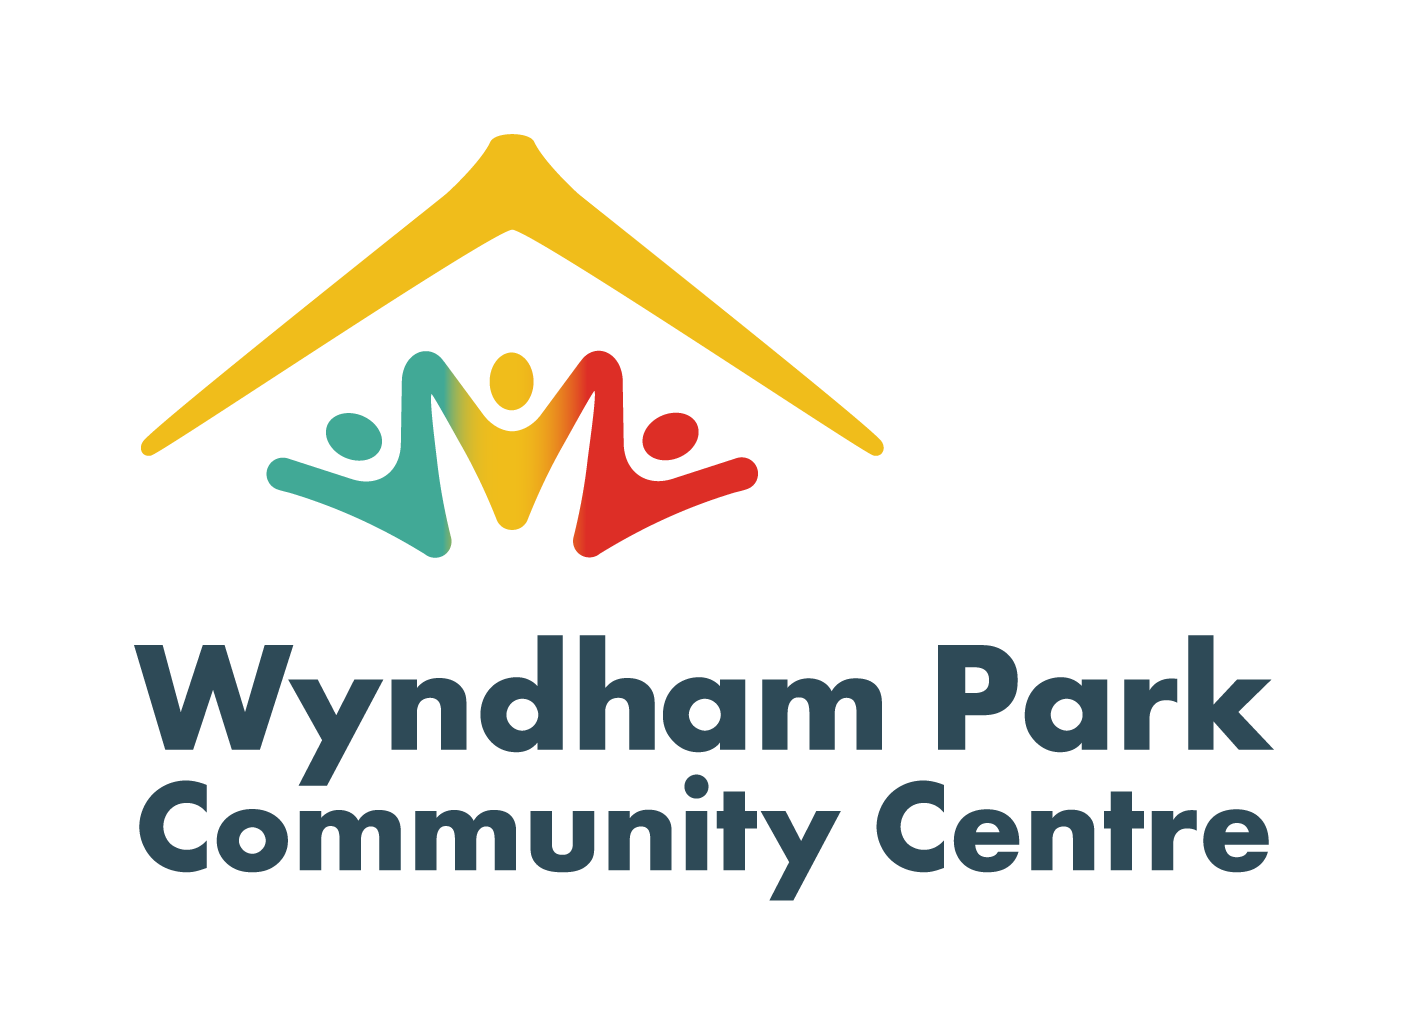 Wyndham Park Community Centre